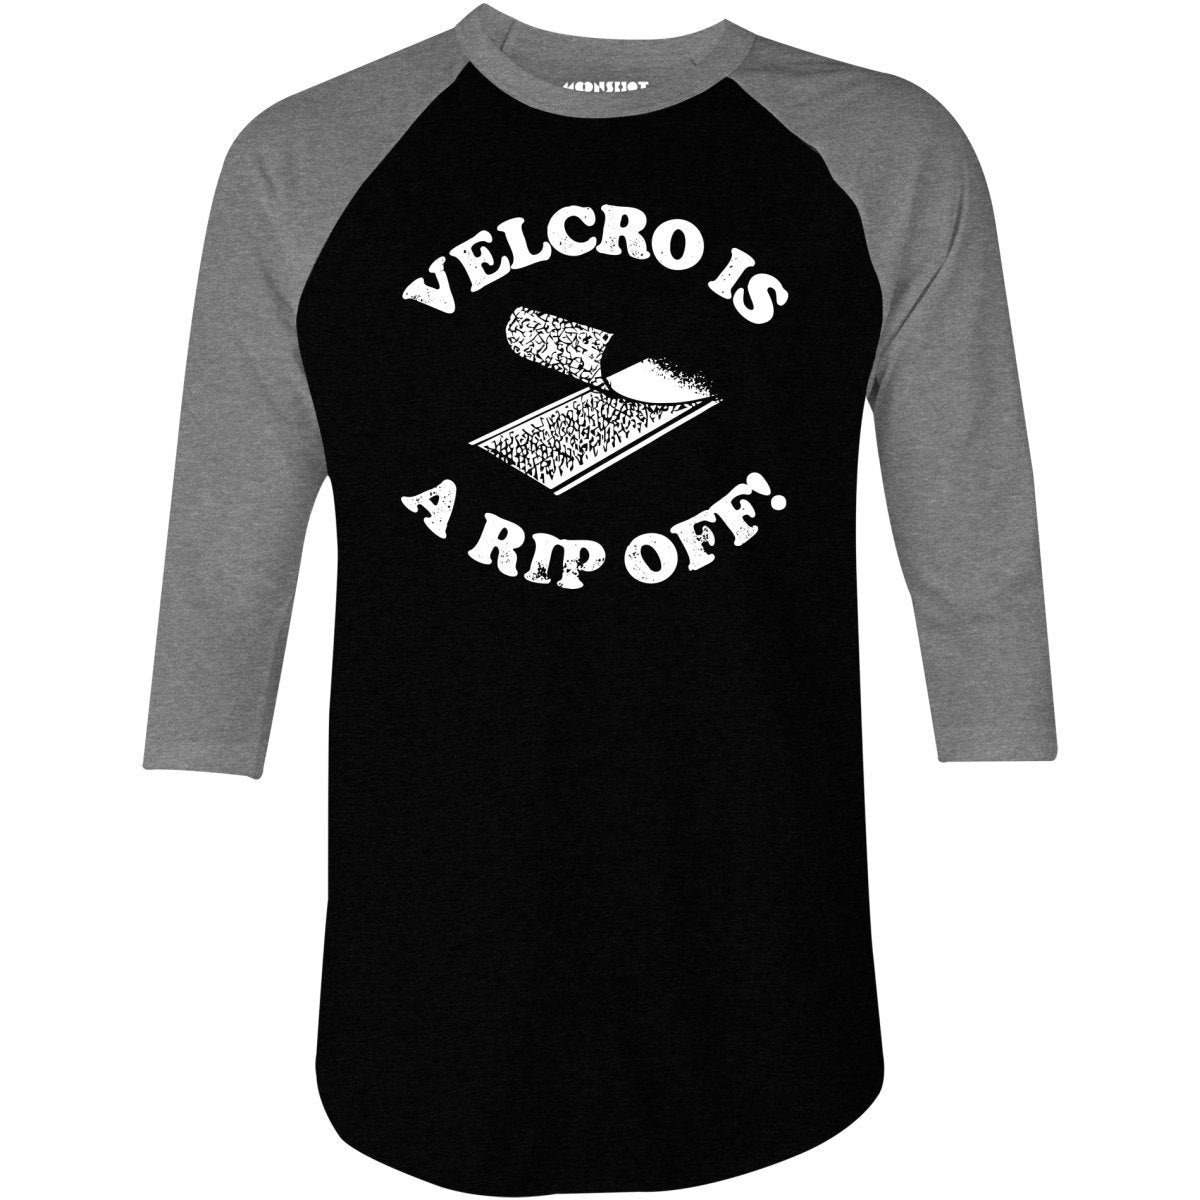 Velcro is a Rip Off - 3/4 Sleeve Raglan T-Shirt